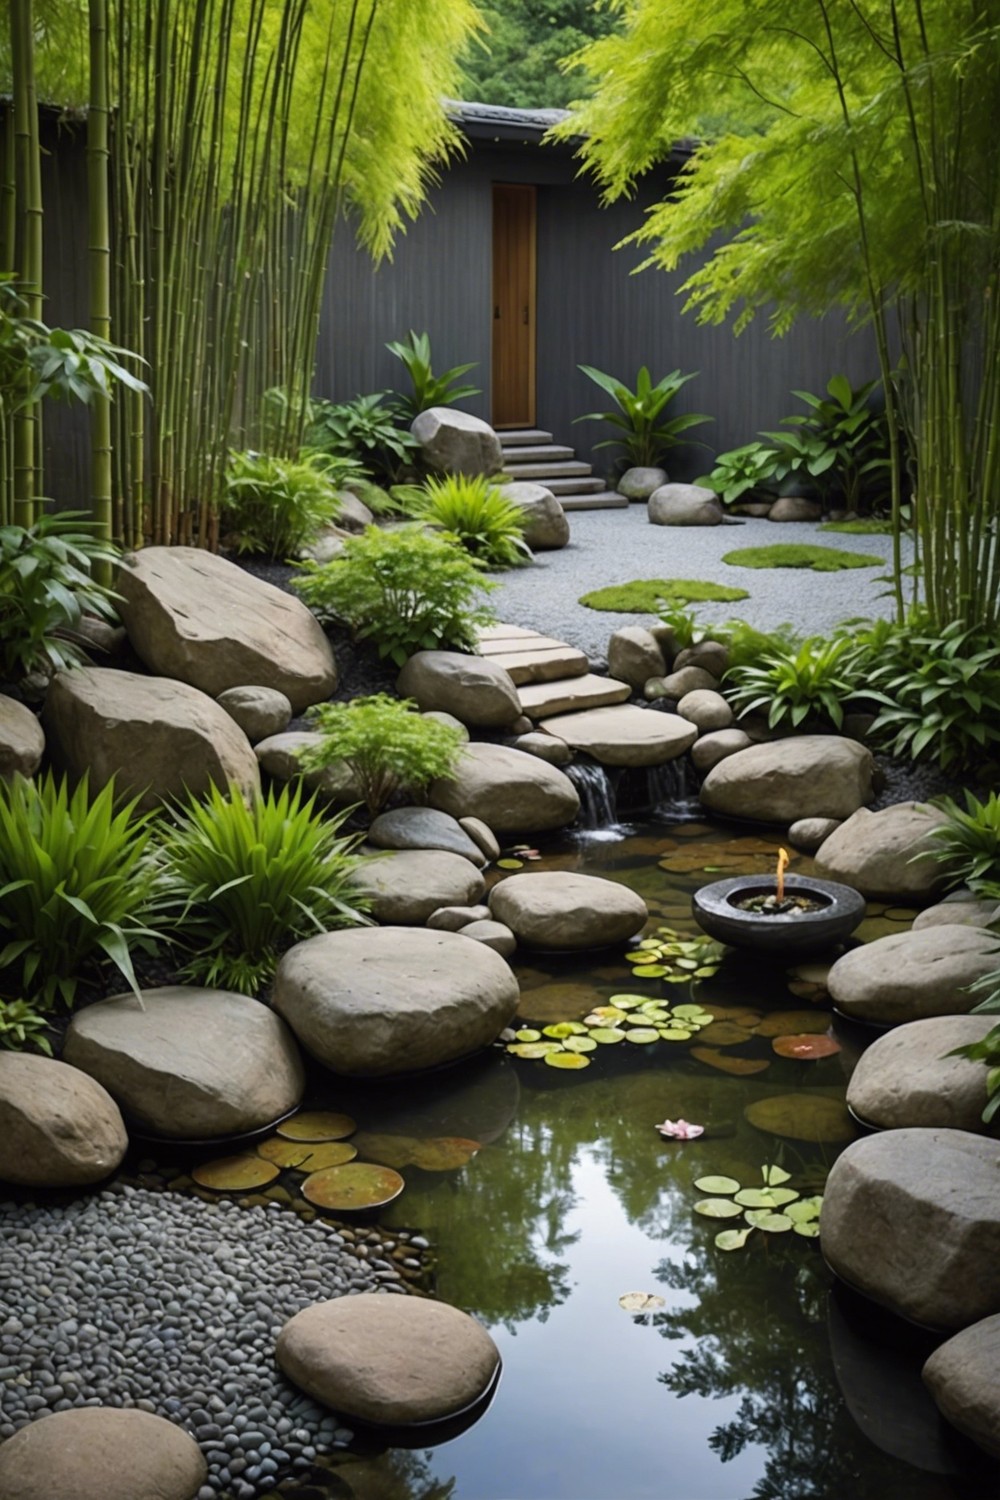 Peaceful Bamboo and Zen Gardens